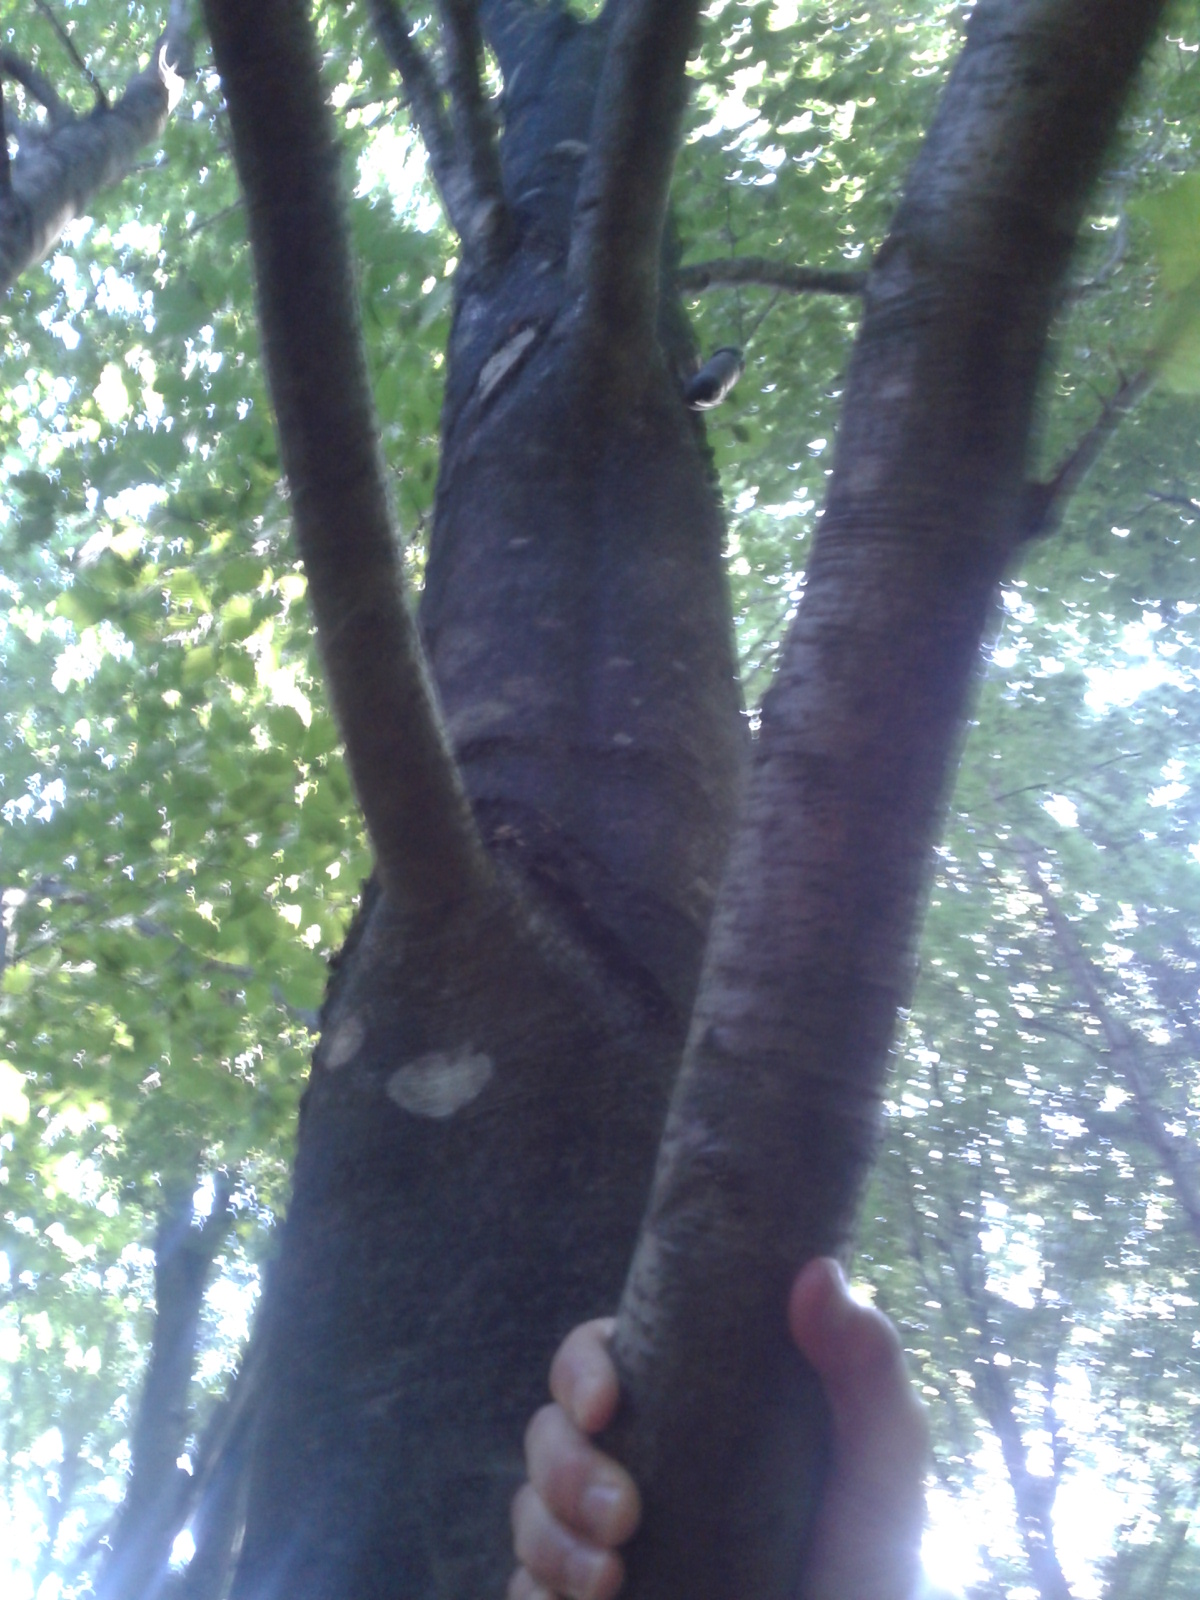 cache hidden on a tree